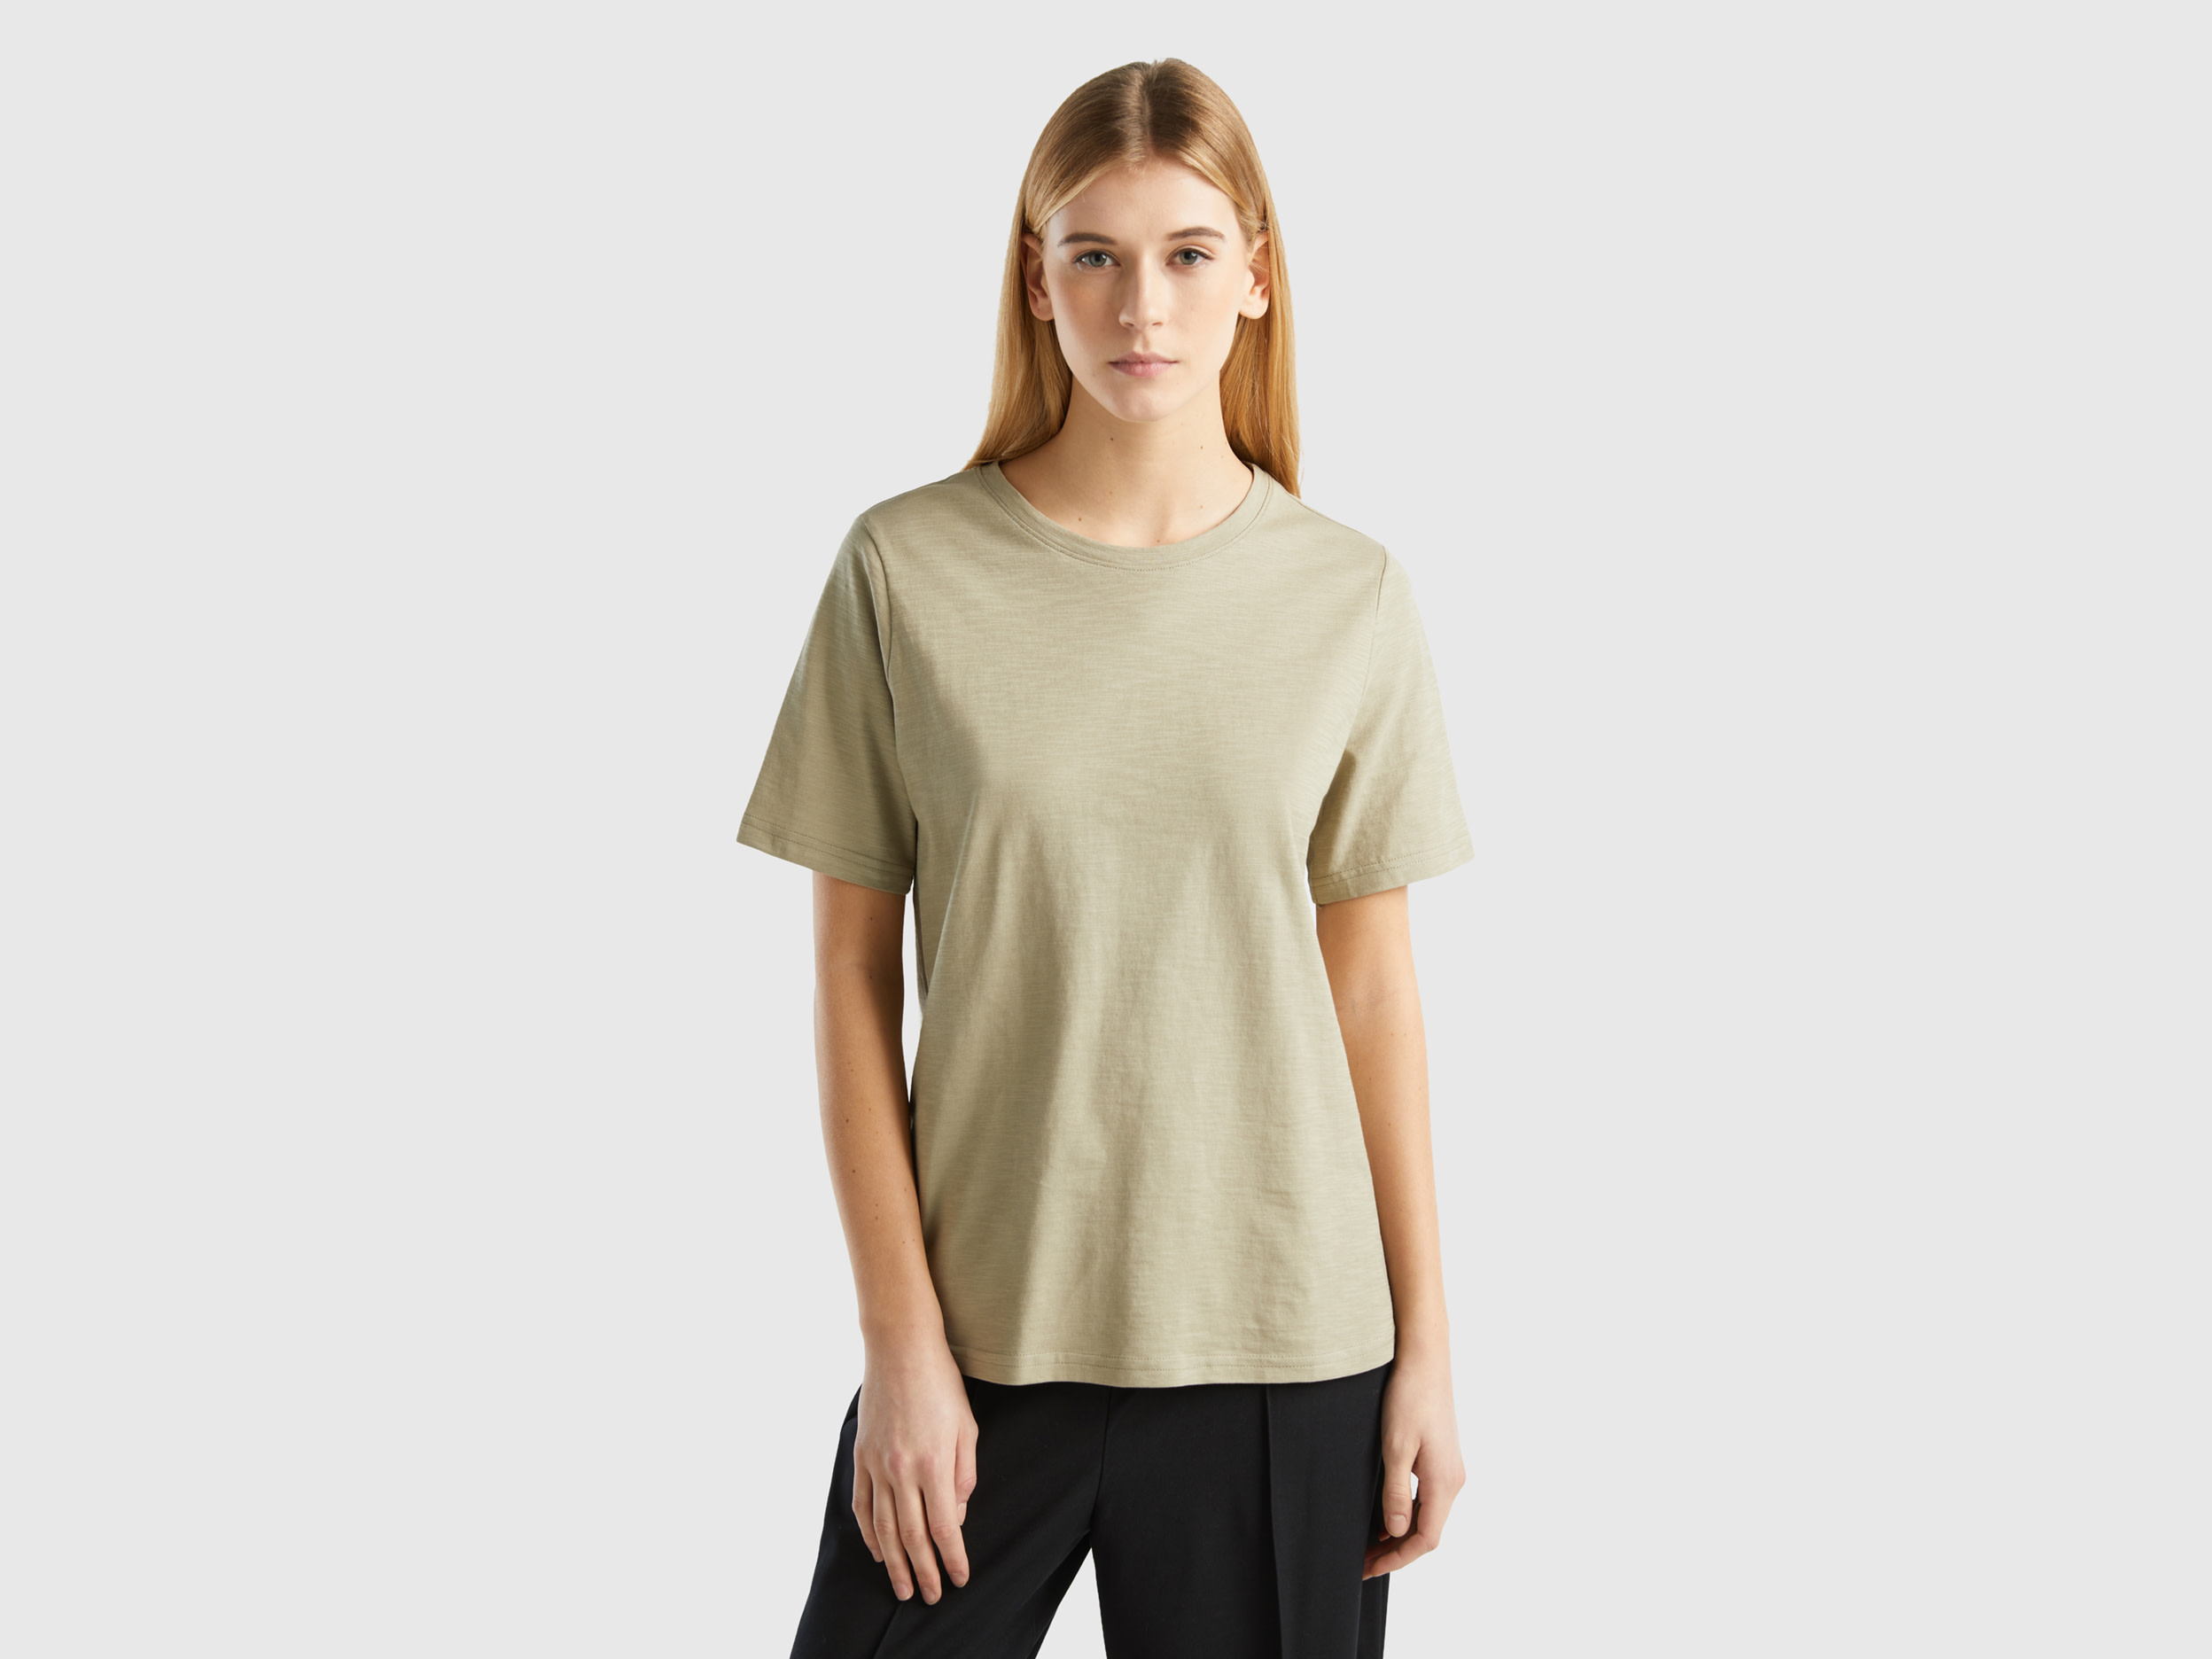 Benetton, Crew Neck T-shirt In Slub Cotton, size S, Light Green, Women